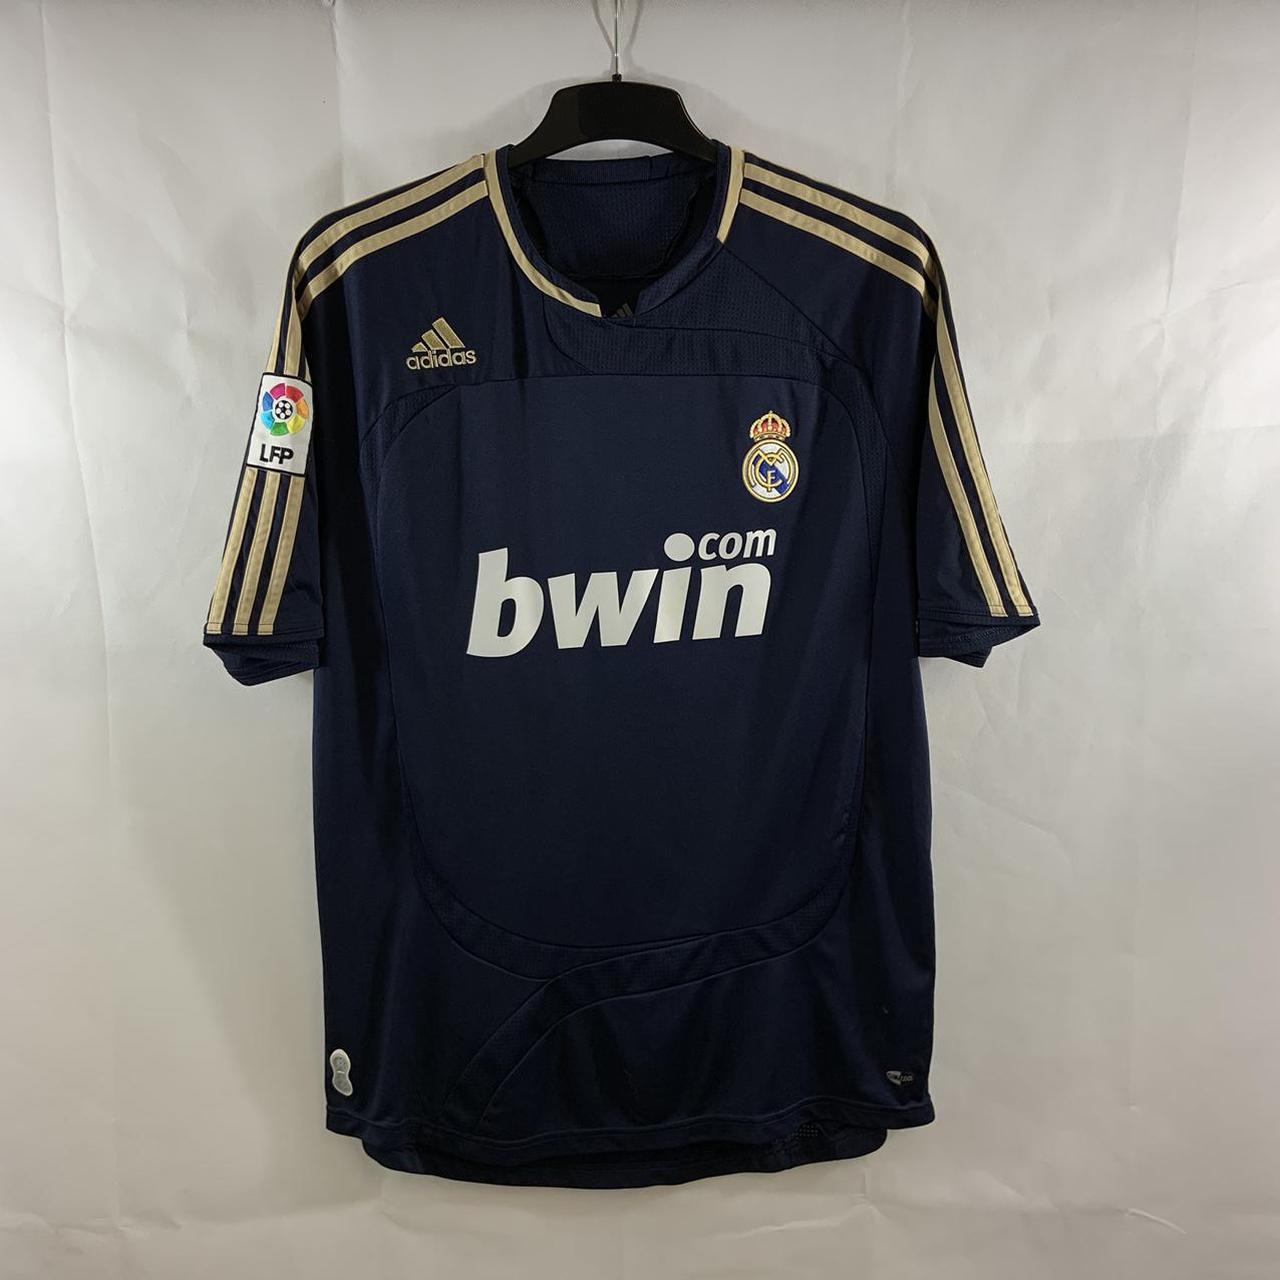 Real Madrid Away Football Shirt 2007/08 Adults Large... - Depop